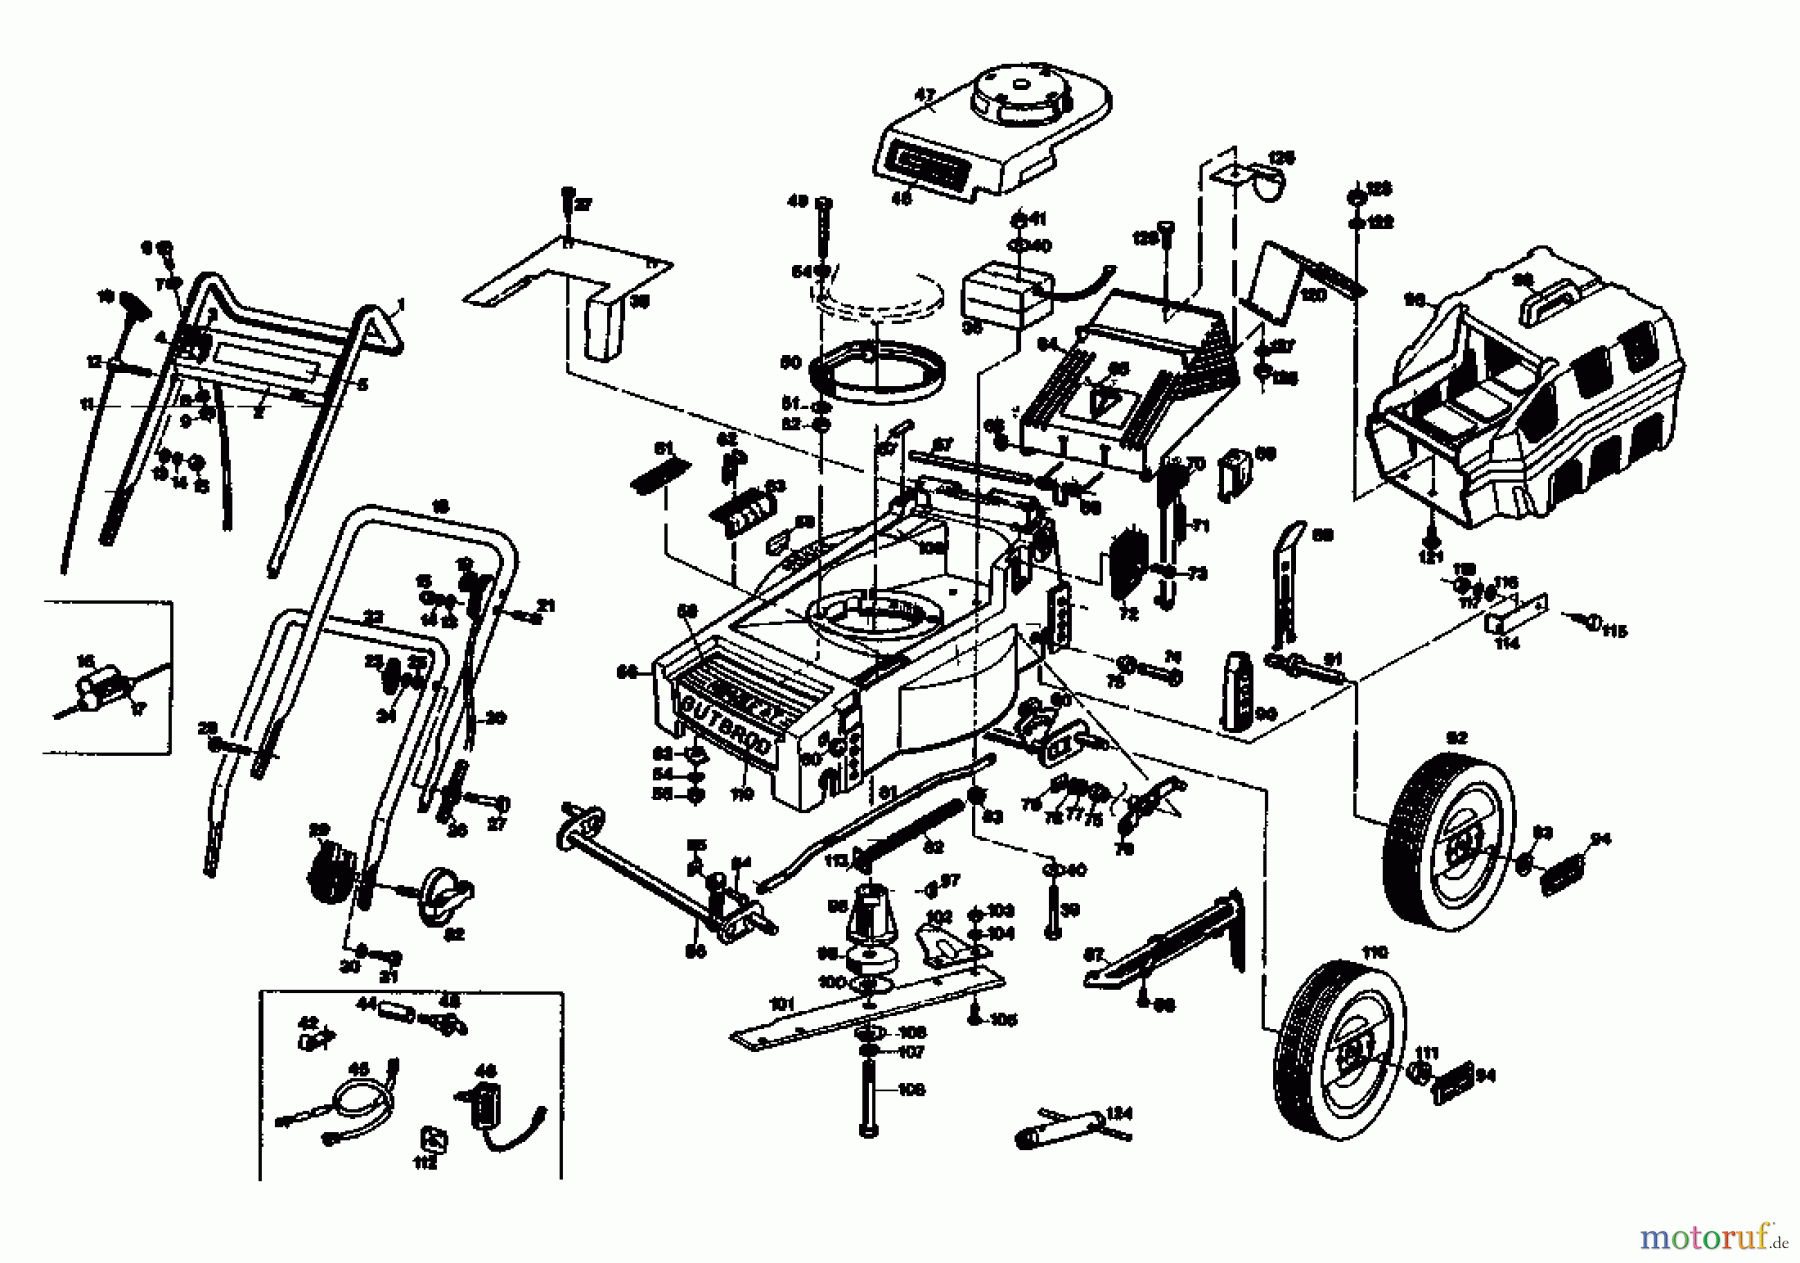  Gutbrod Petrol mower HB 40 BS 02896.04  (1987) Basic machine